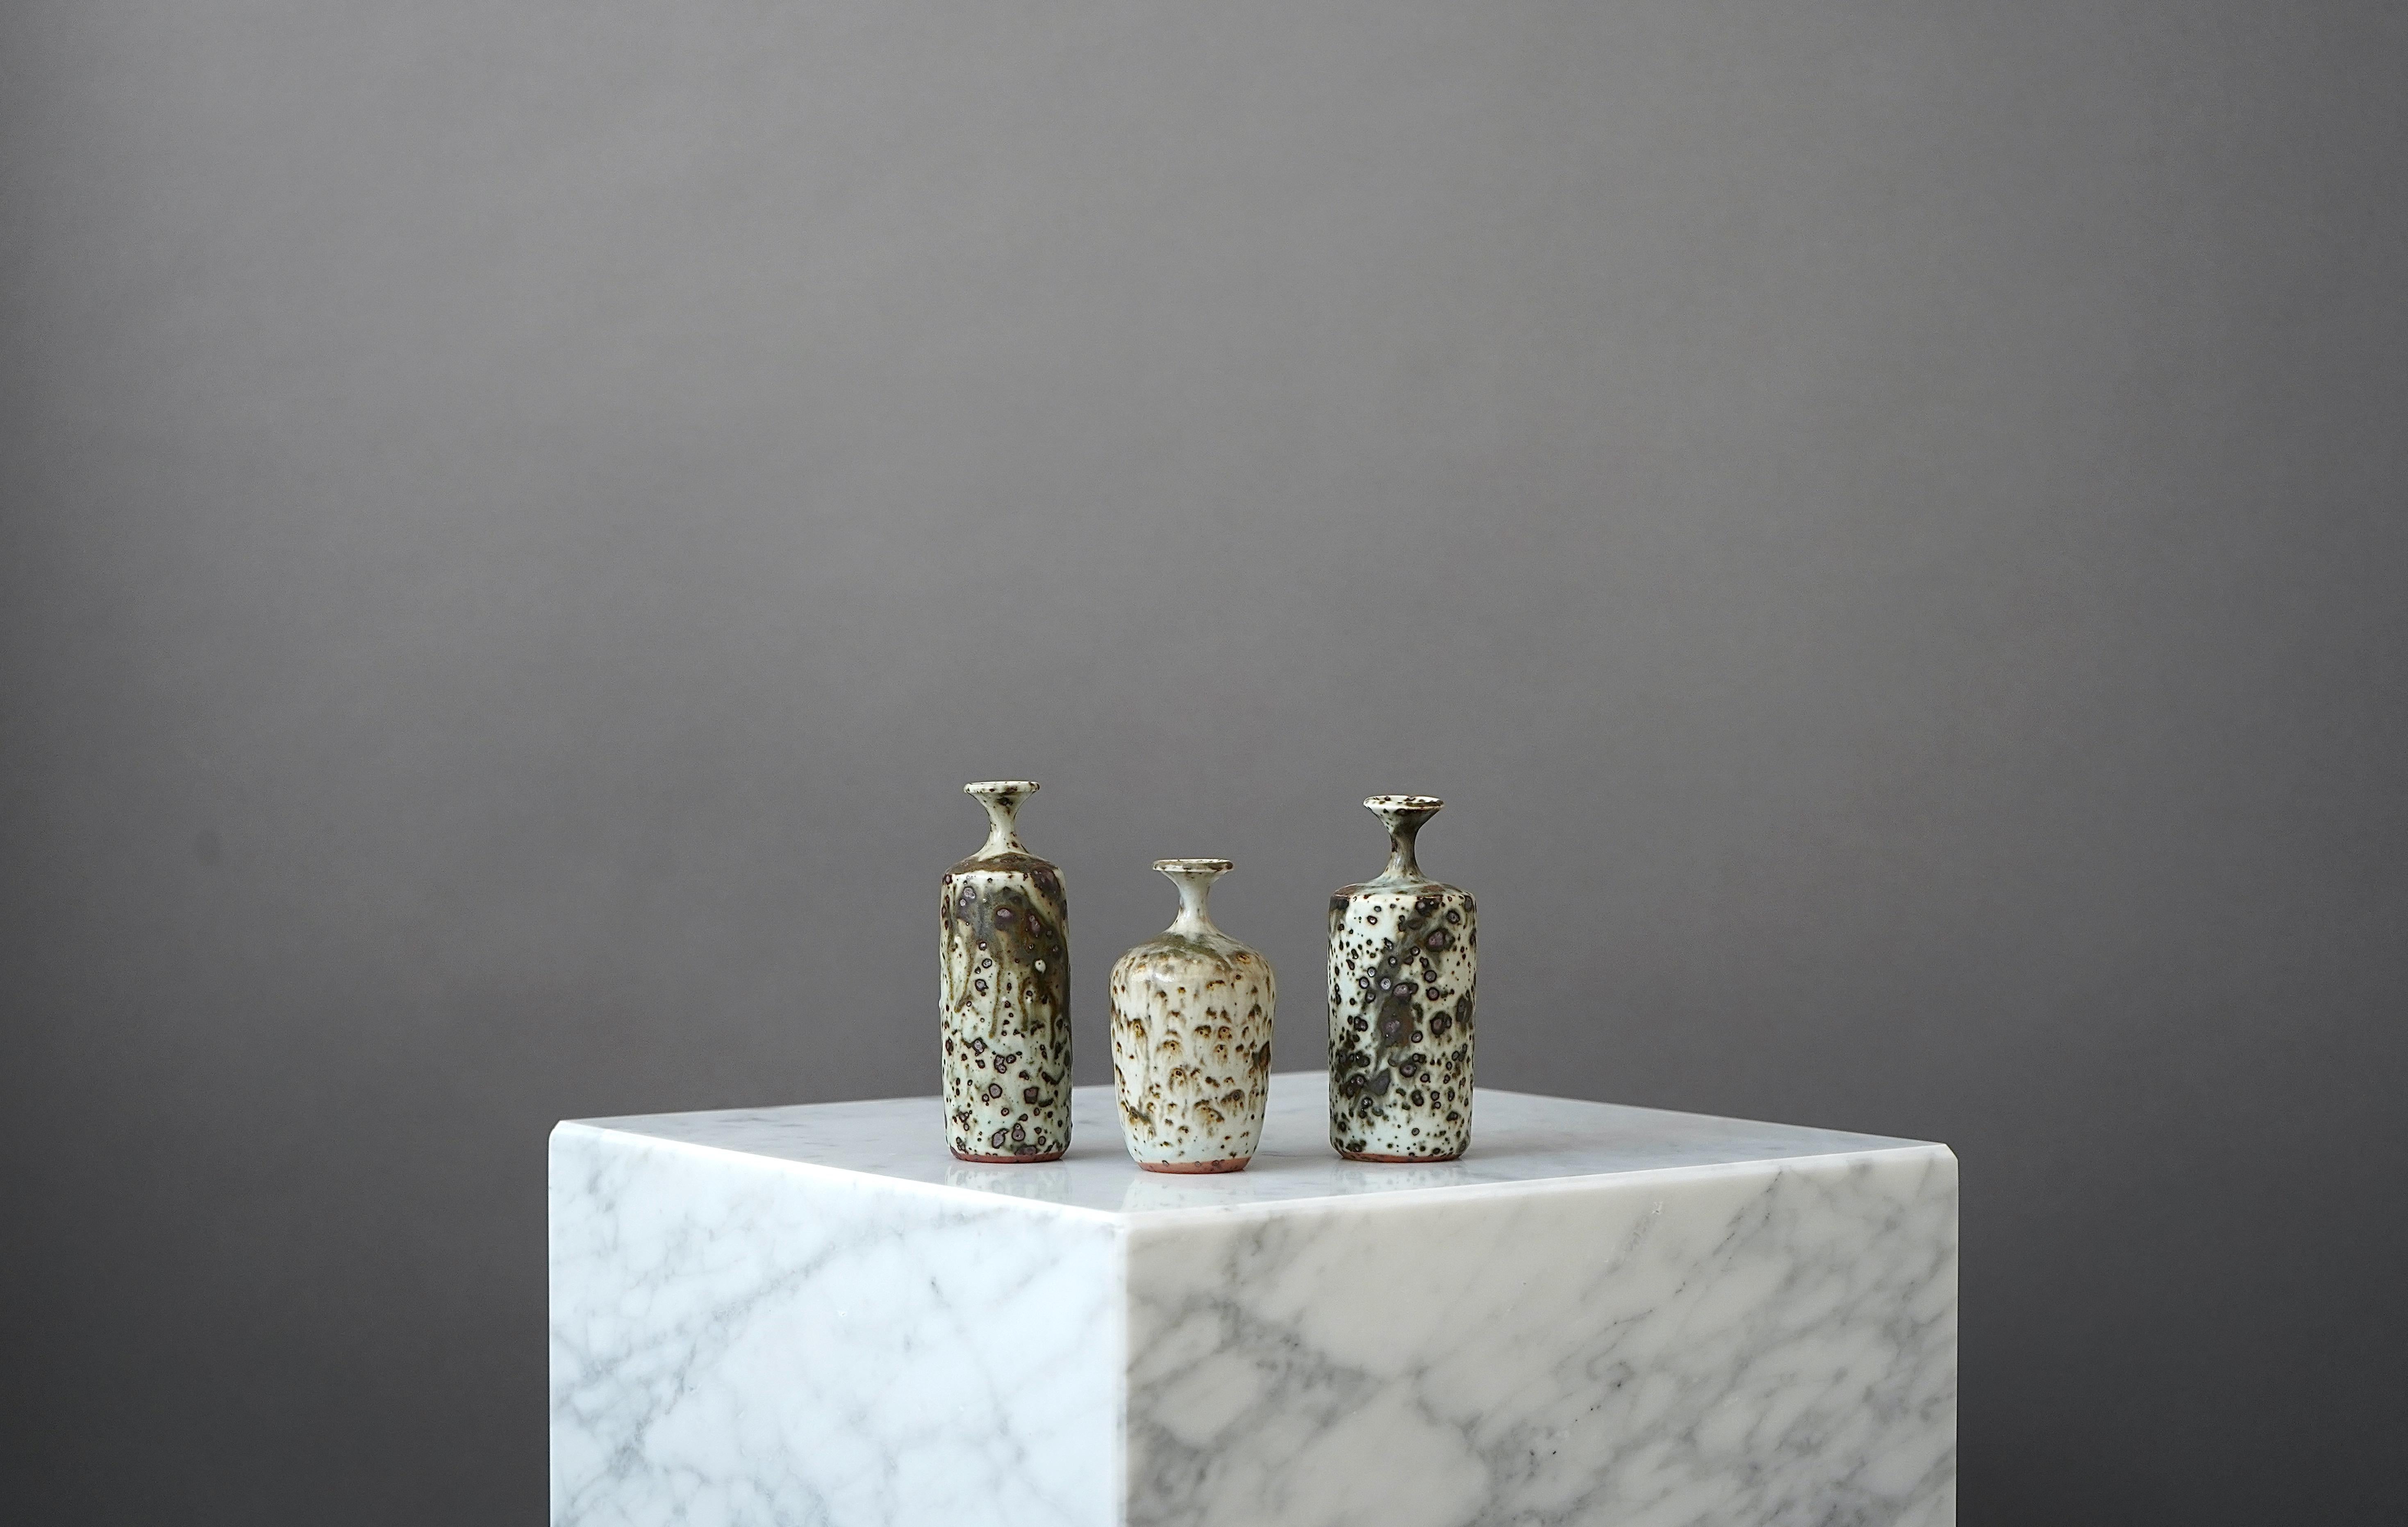 Scandinavian Modern Set of 3 Stoneware Vases by Swedish Ceramist Rolf Palm, 1973 For Sale